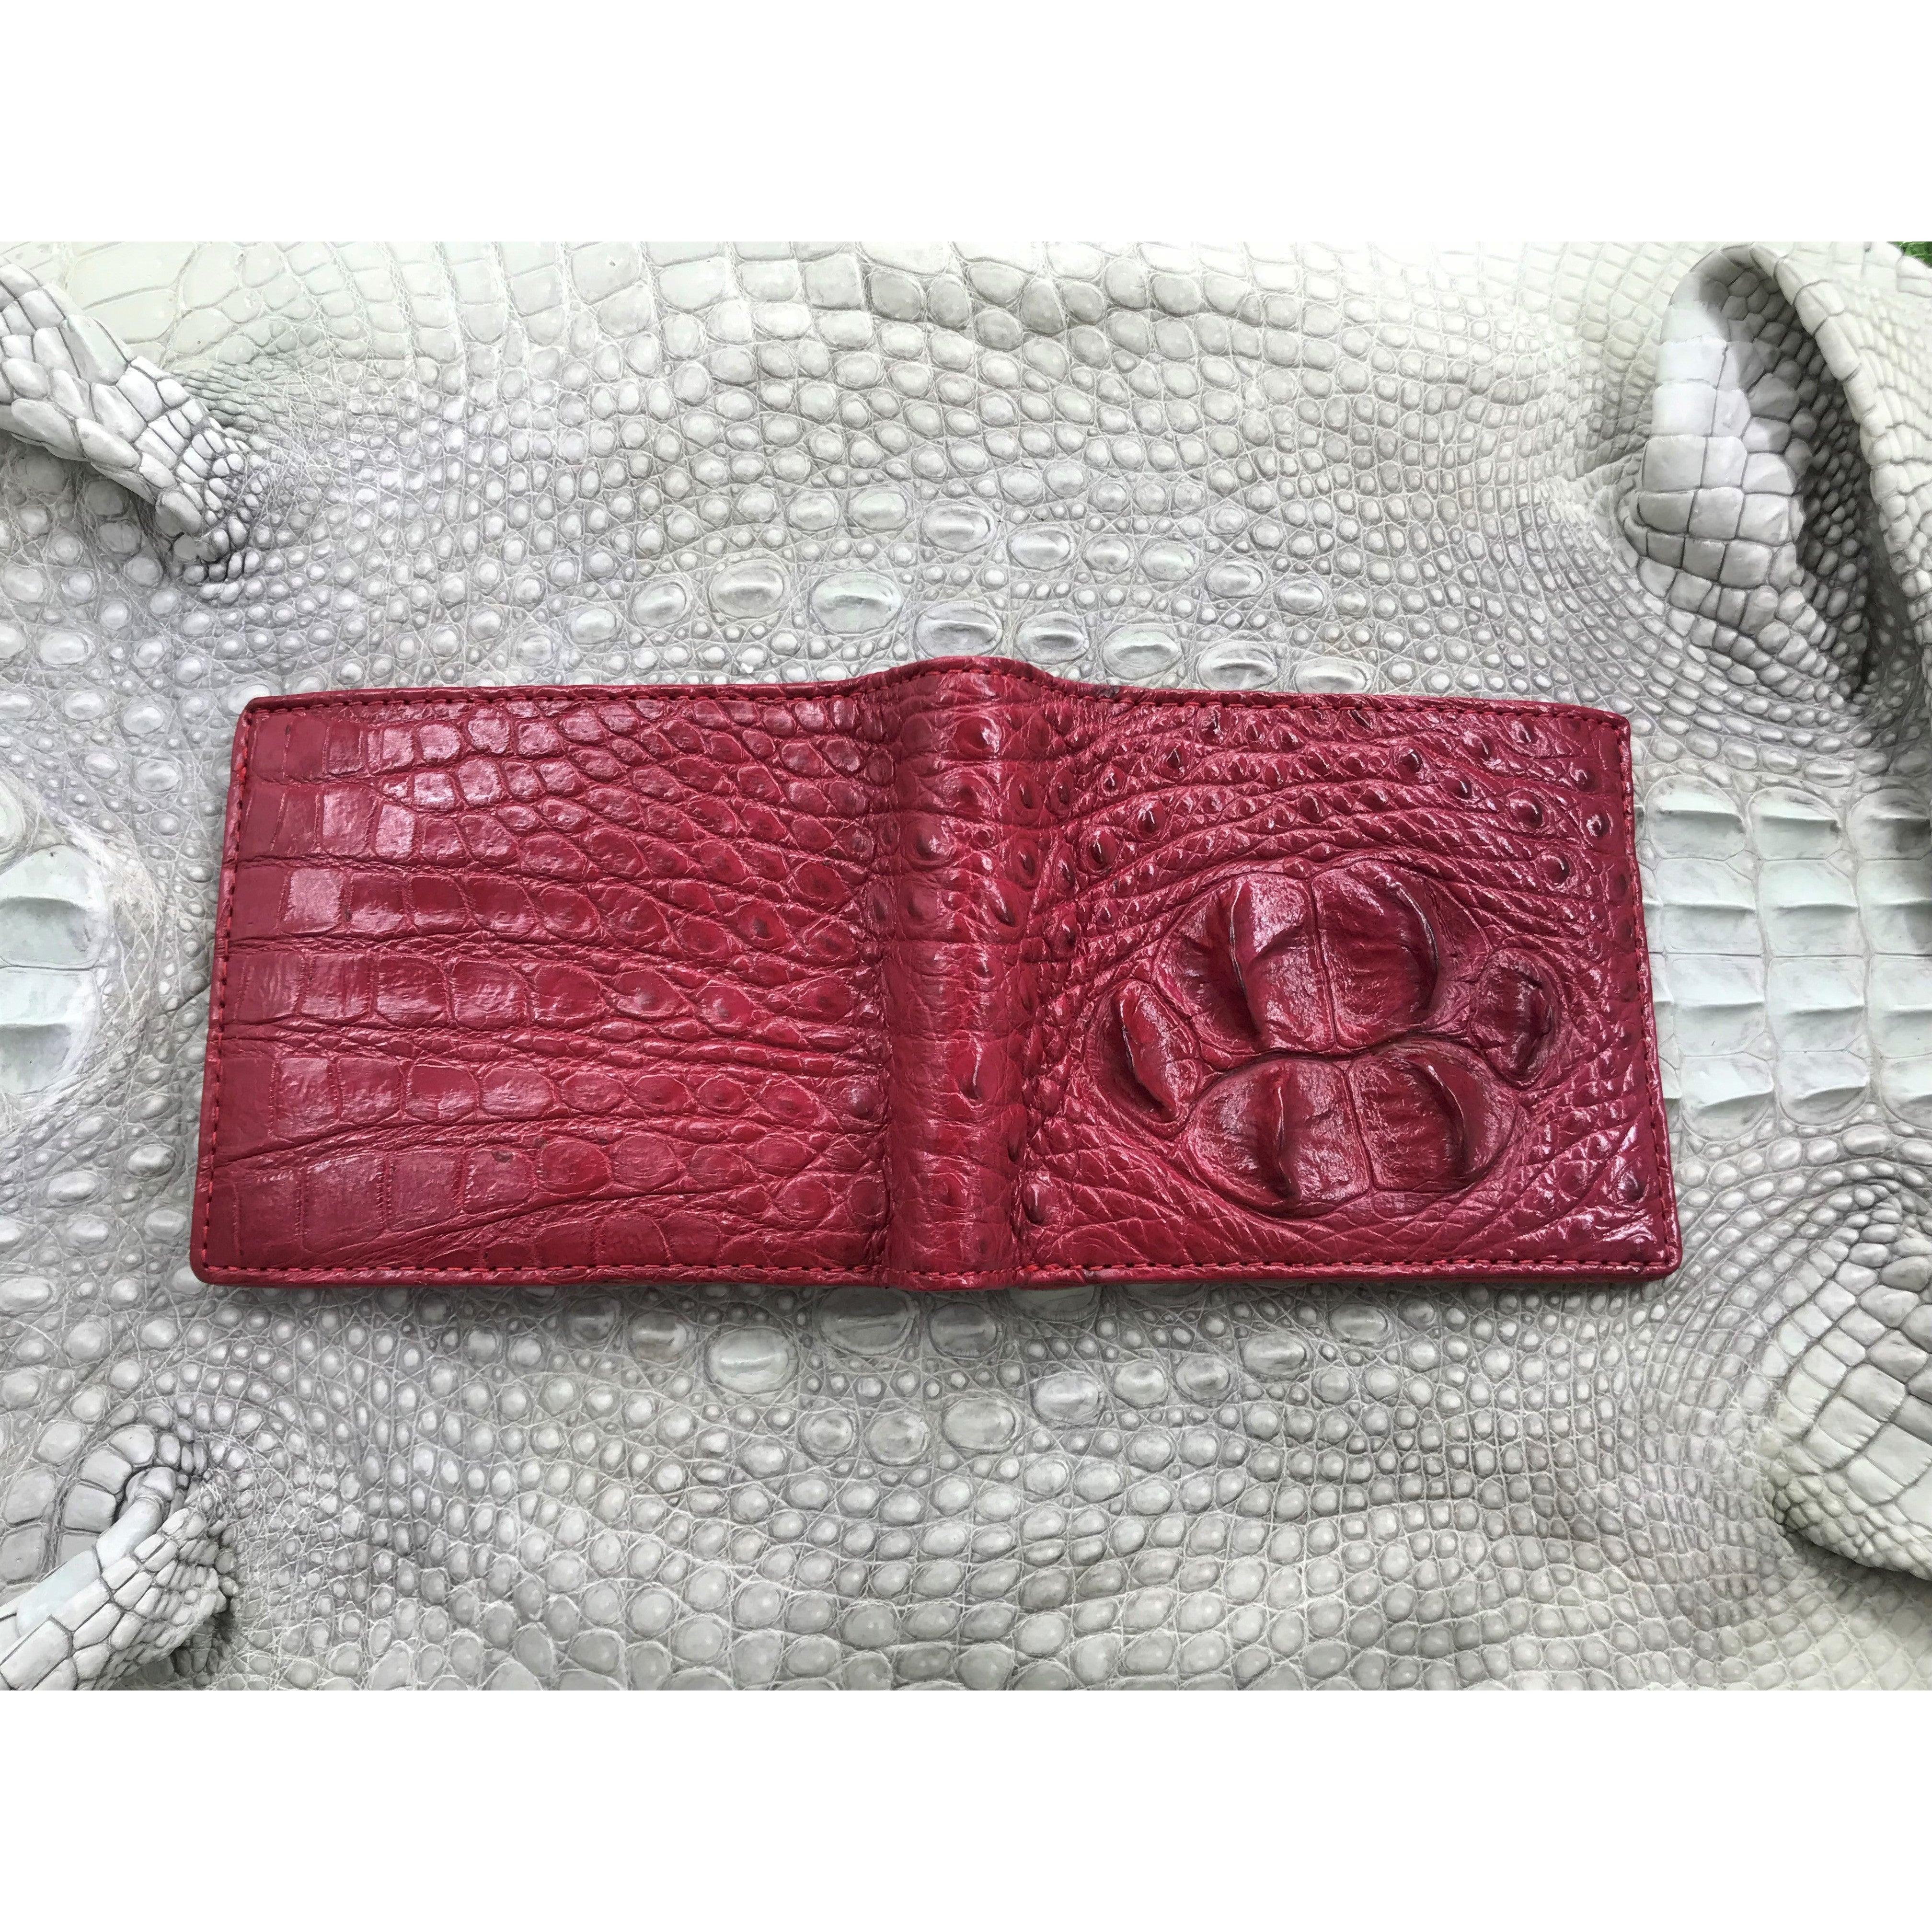 Red Burgundy Alligator Skin Bifold Wallet For Men | Handmade Crocodile Leather Wallet RFID Blocking | VL4537 - Vinacreations